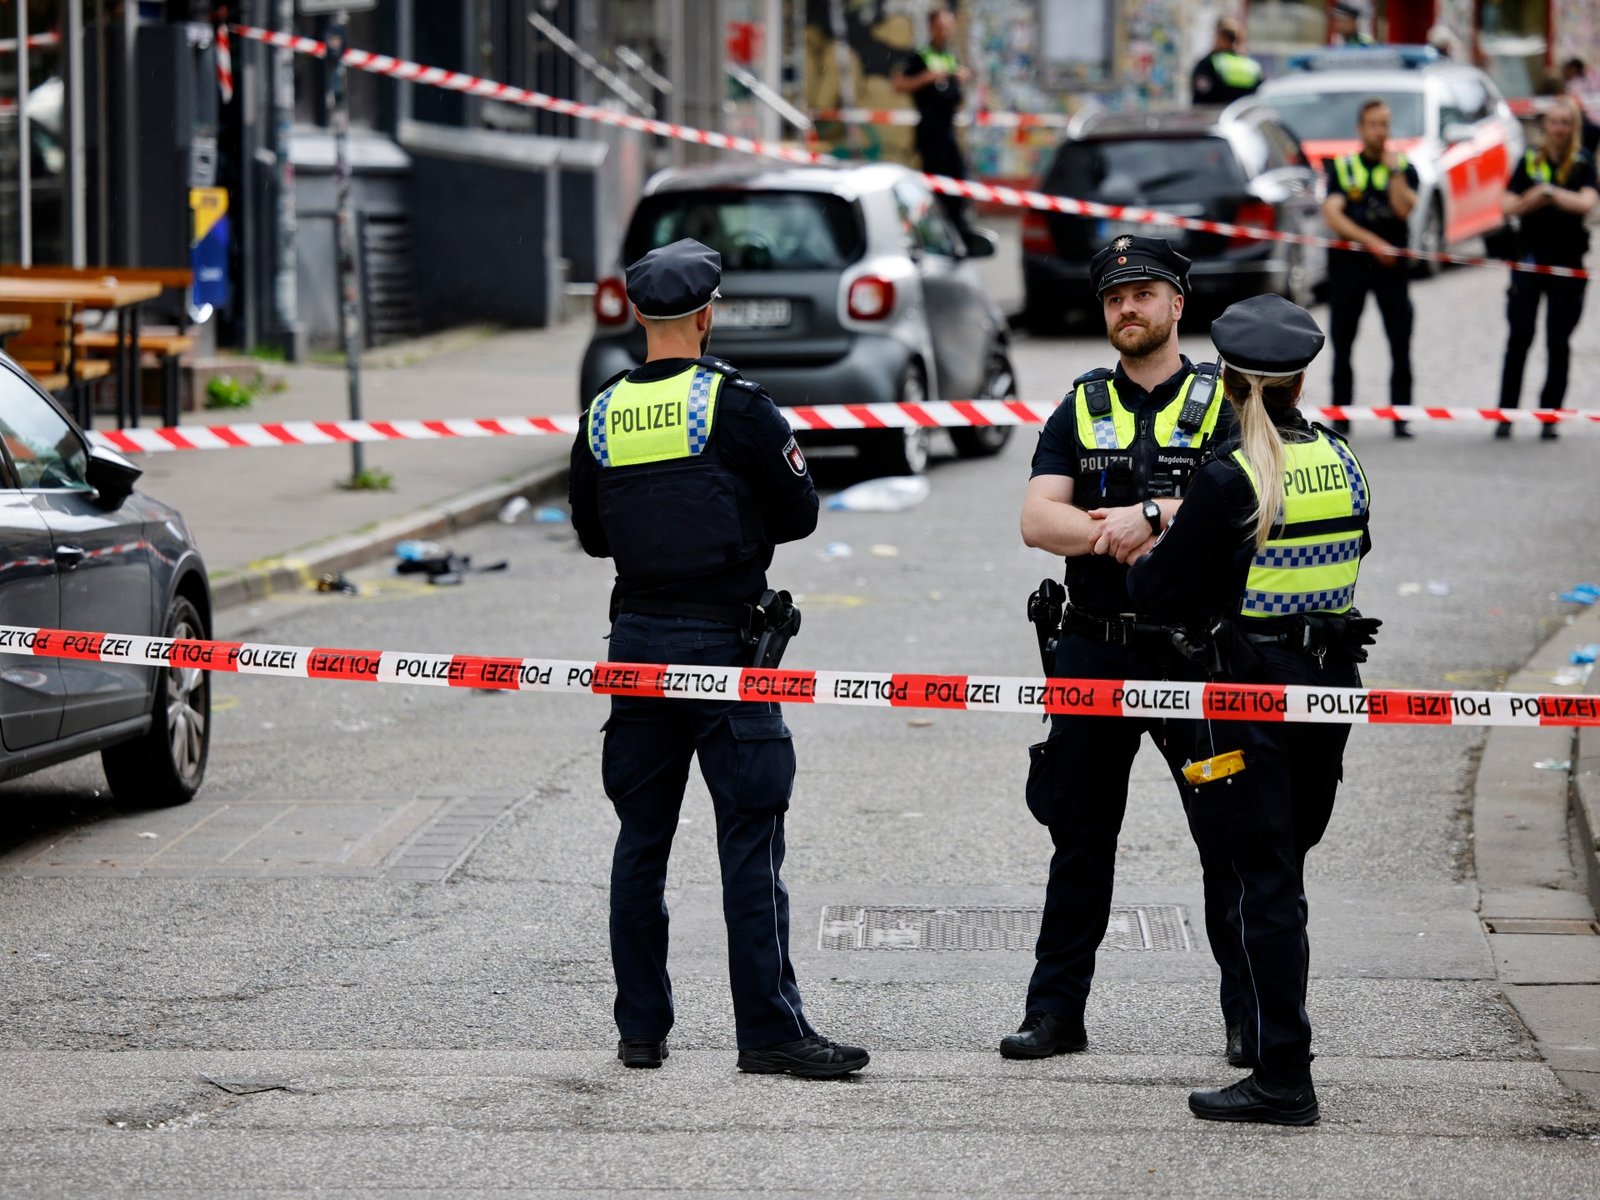 Euro 2024 Hamburg police fire shots at axe wielding person at fan parade | UEFA Euro 2024 News